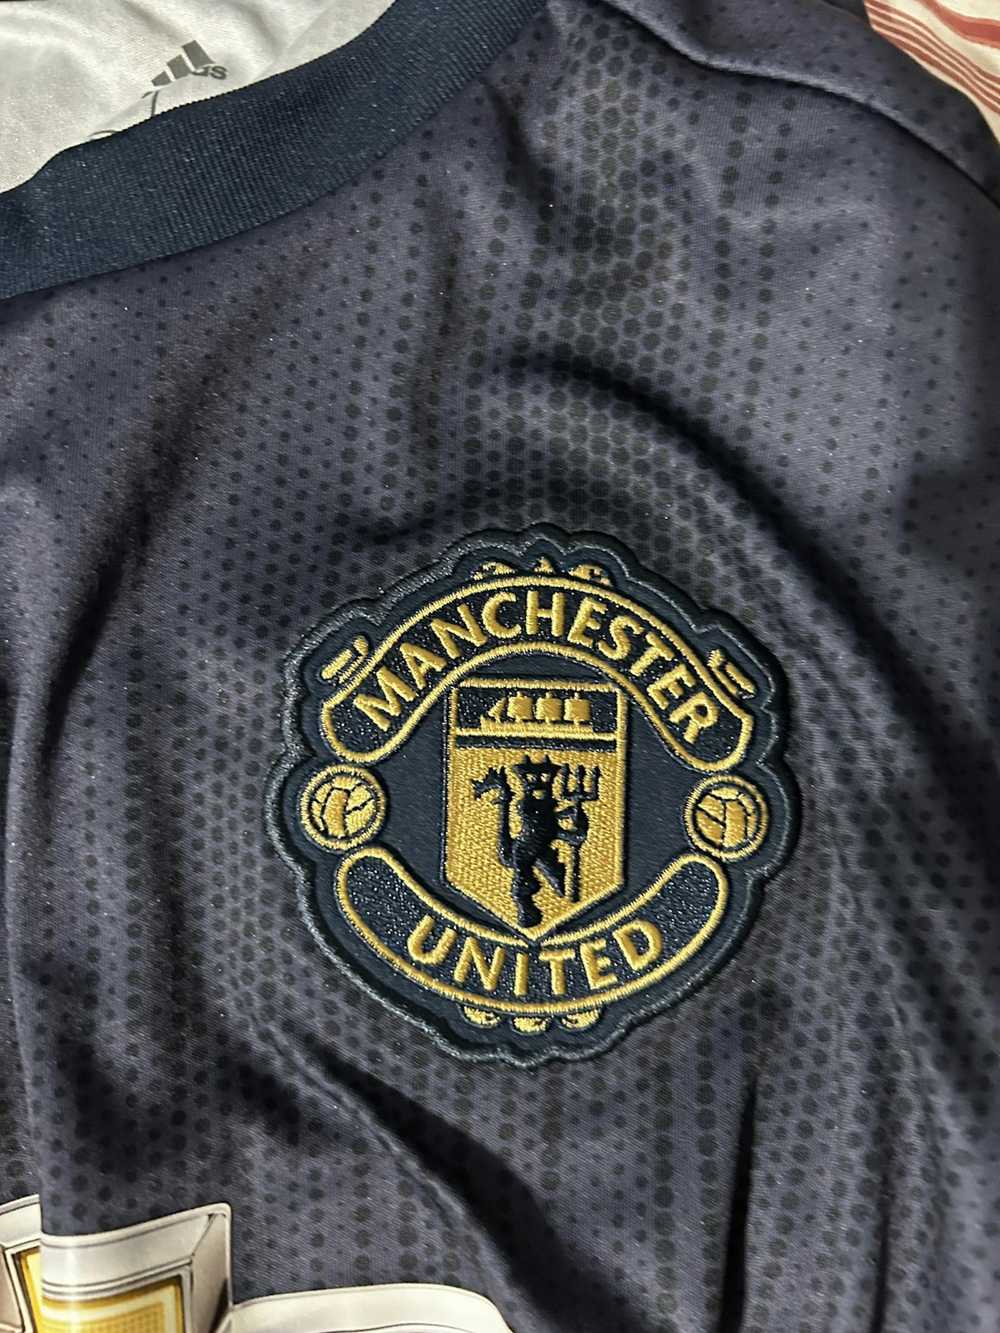 Adidas Manchester United Jersey - image 4